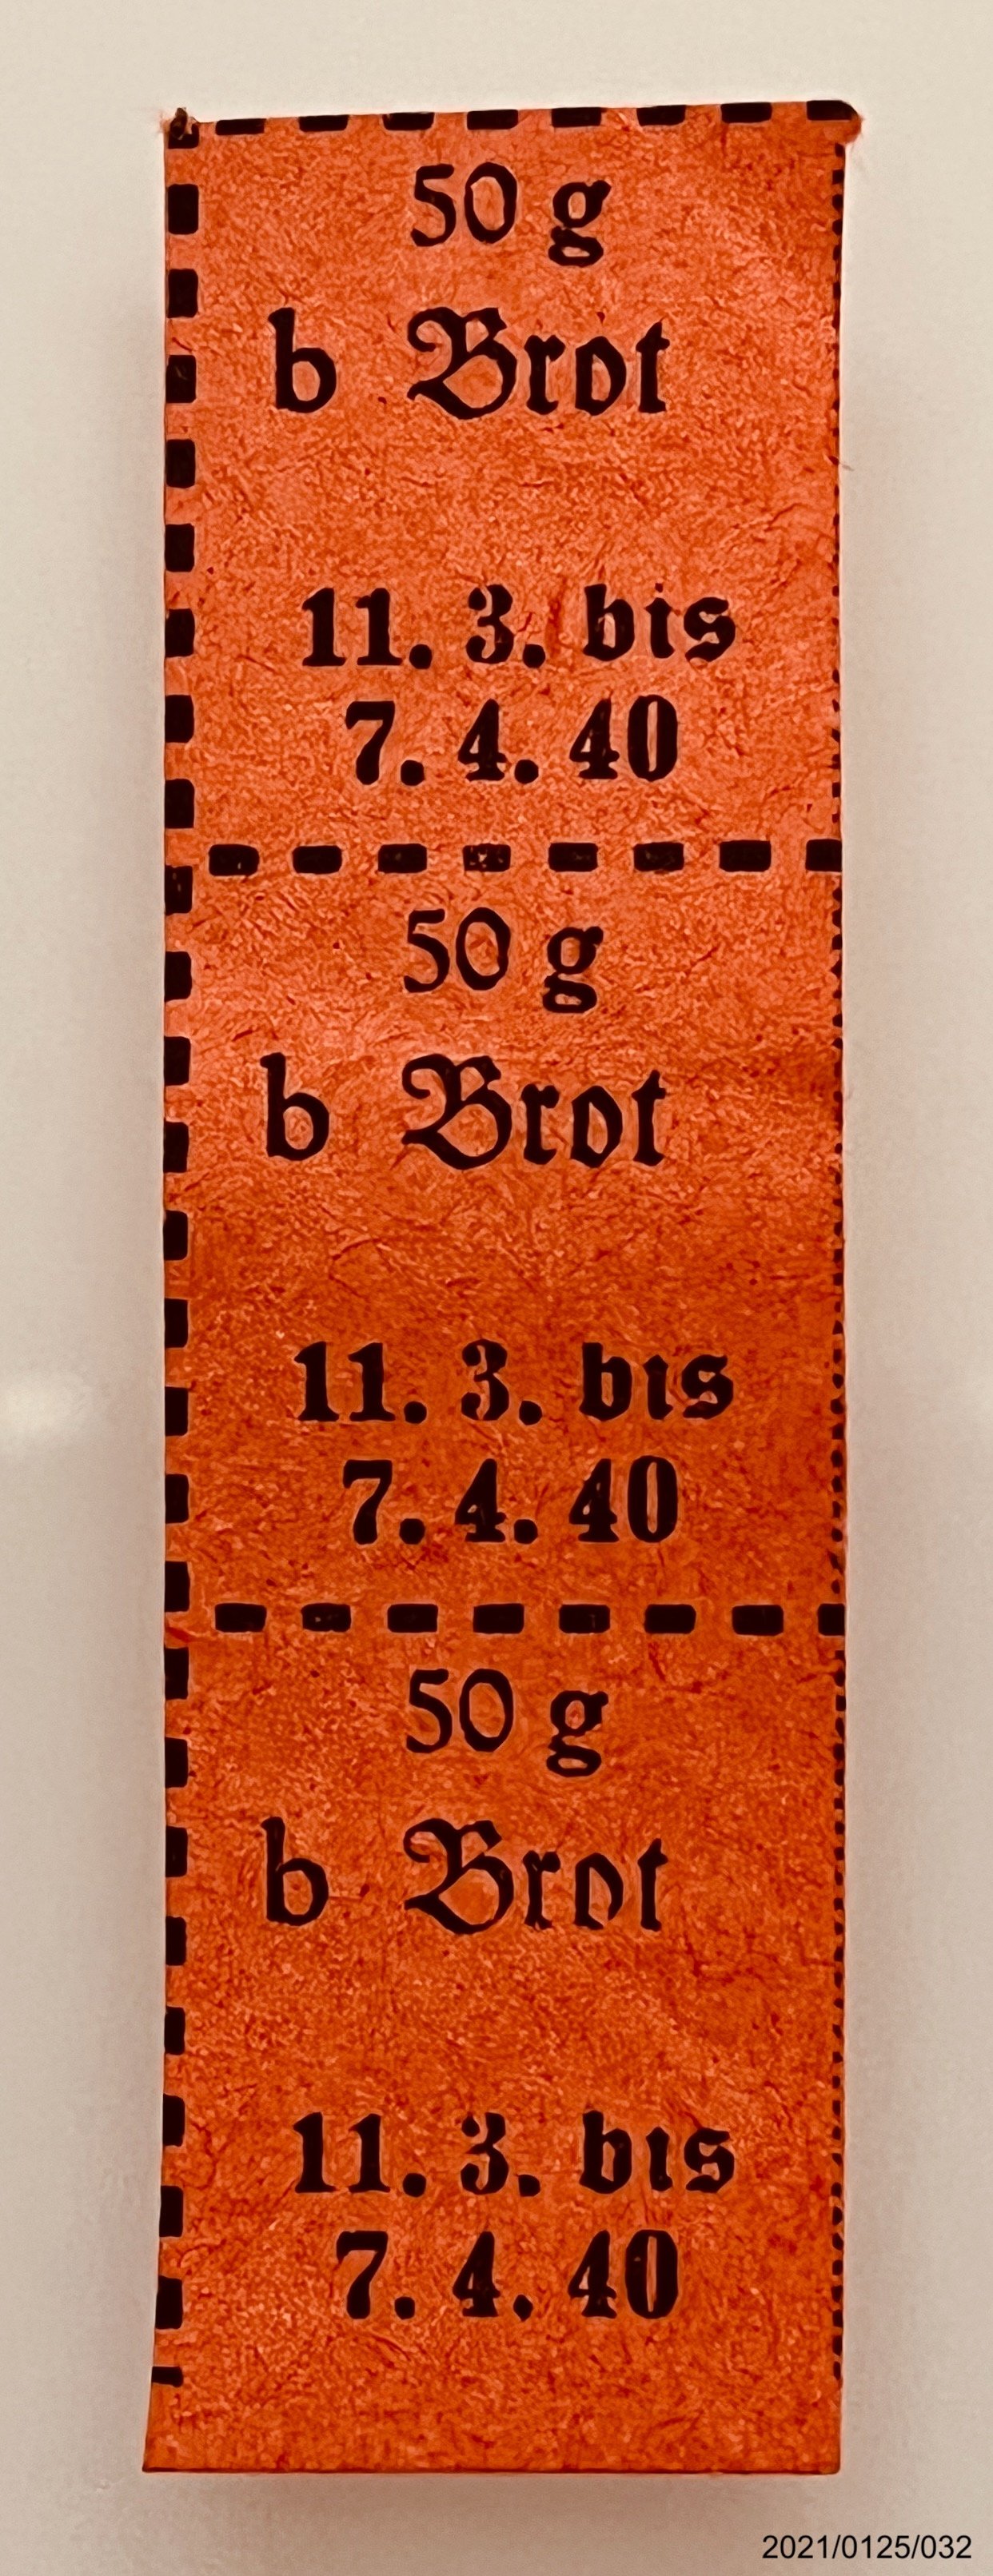 Lebensmittelmarken für 50g Brot 1940 (Museumsgesellschaft Bad Dürkheim e. V. CC BY-NC-SA)